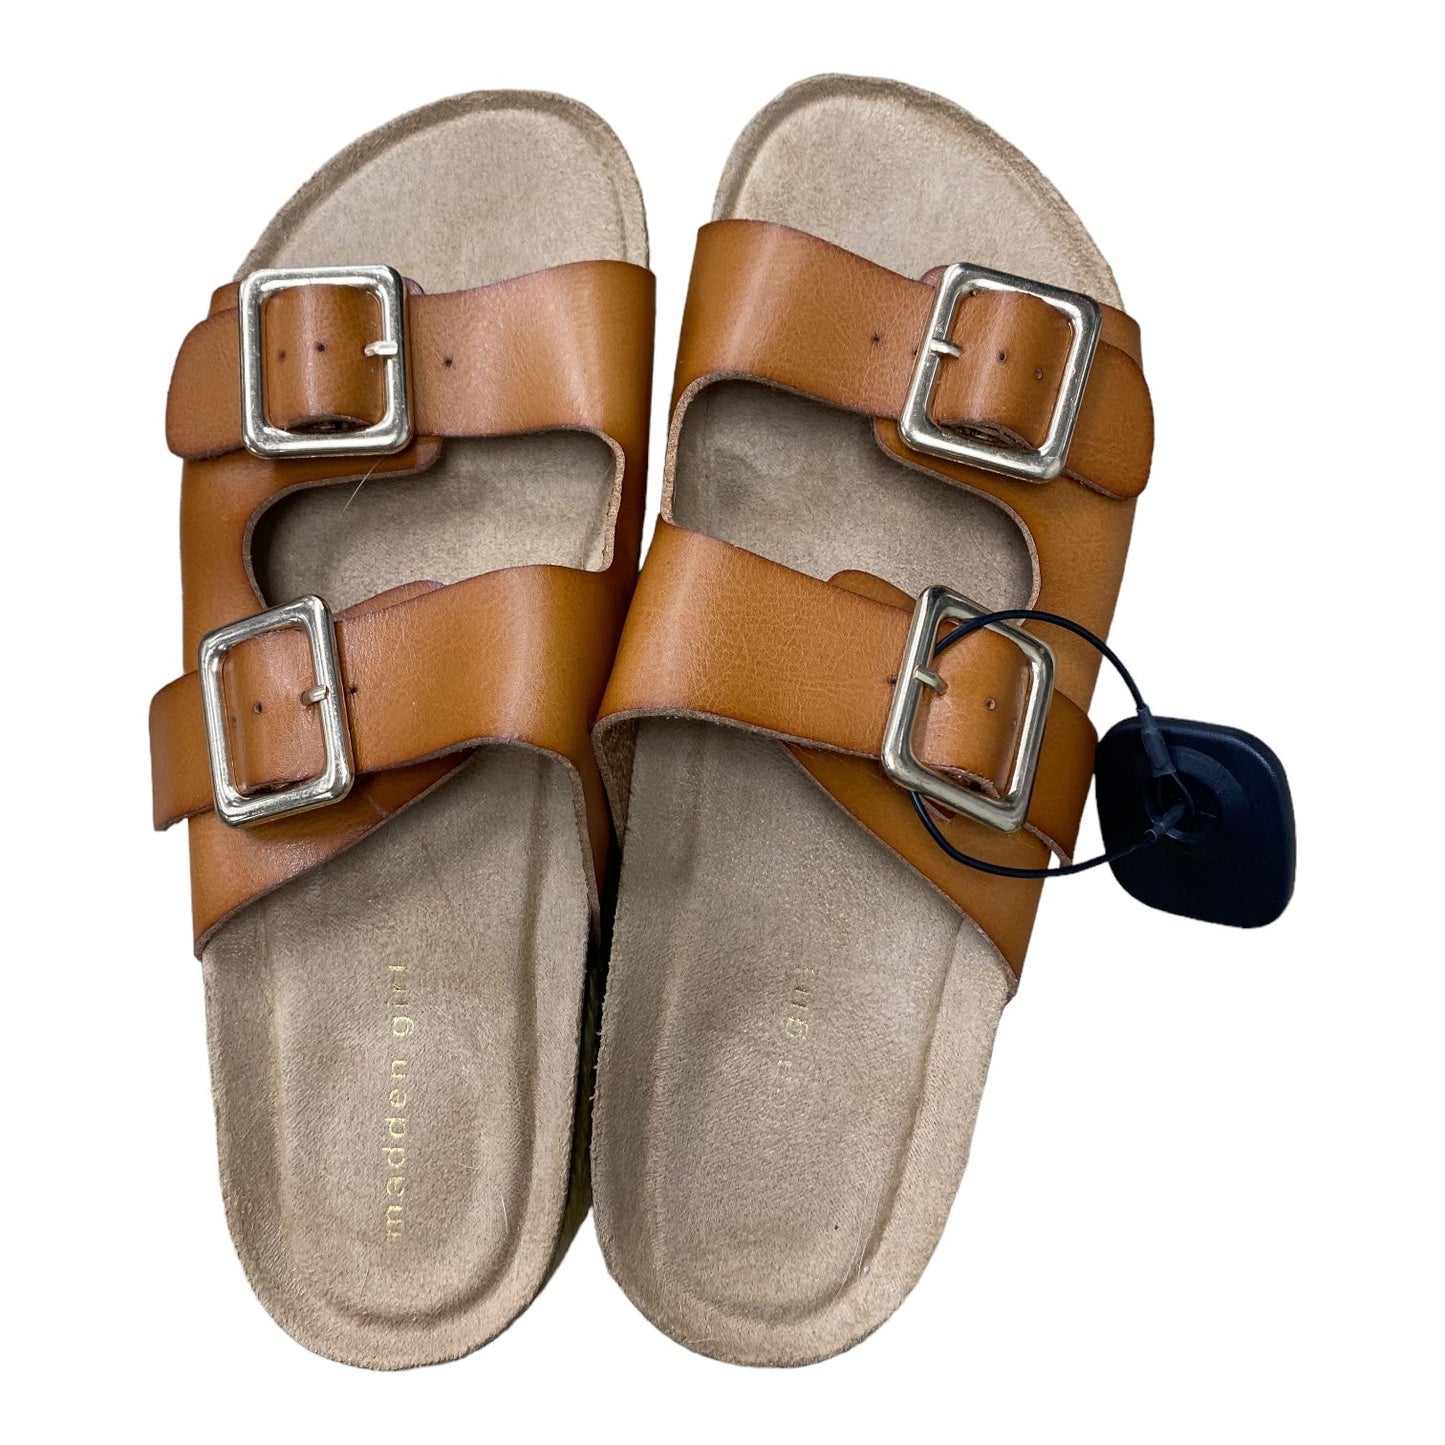 Sandals Heels Platform By Madden Girl  Size: 11